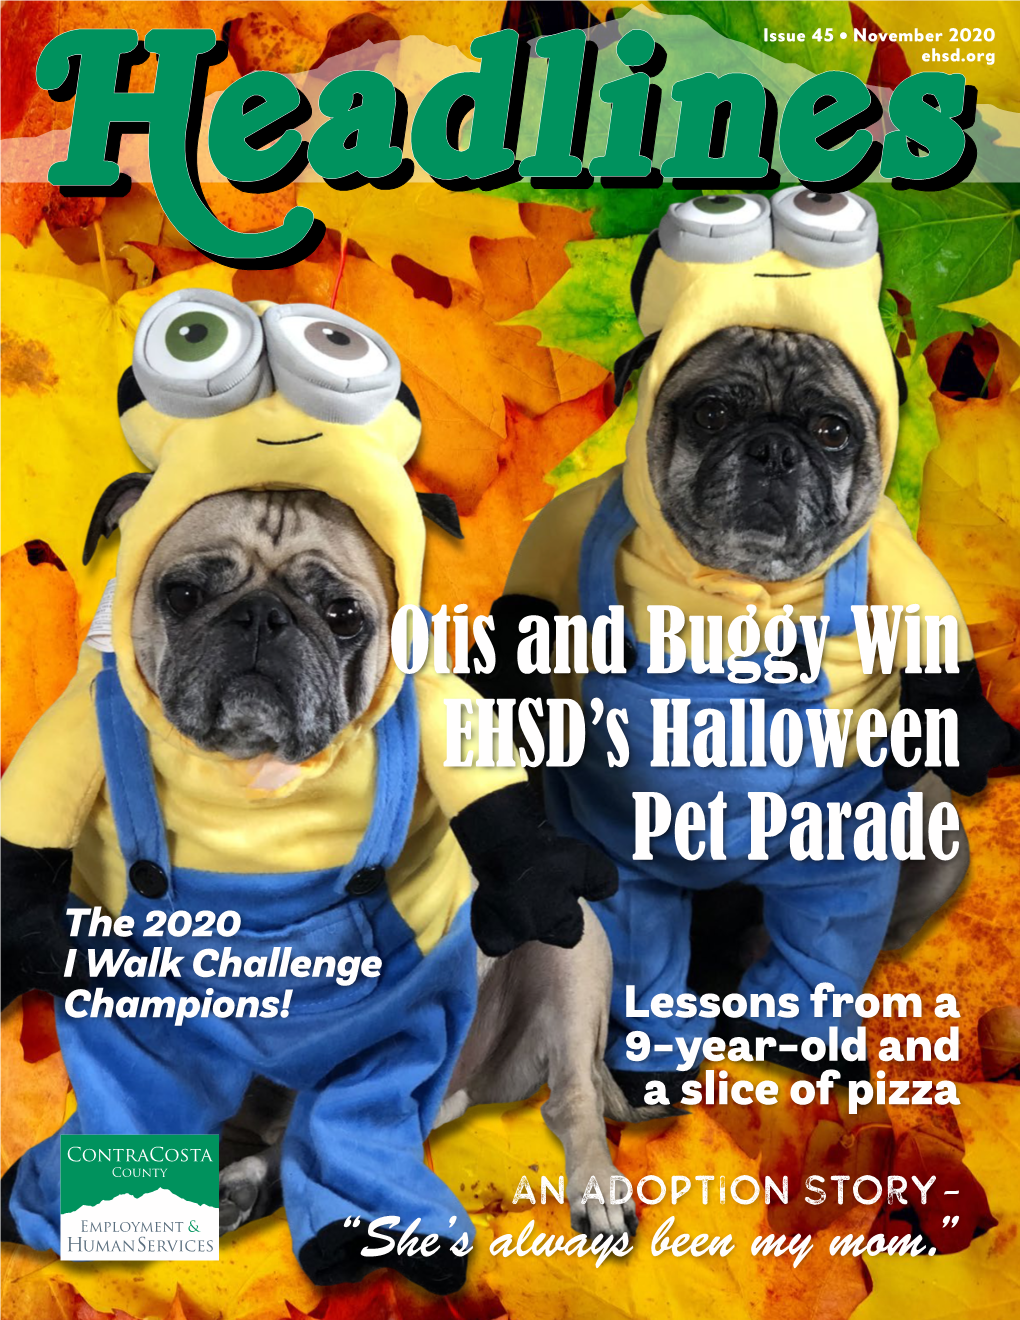 Otis and Buggy Win EHSD's Halloween Pet Parade